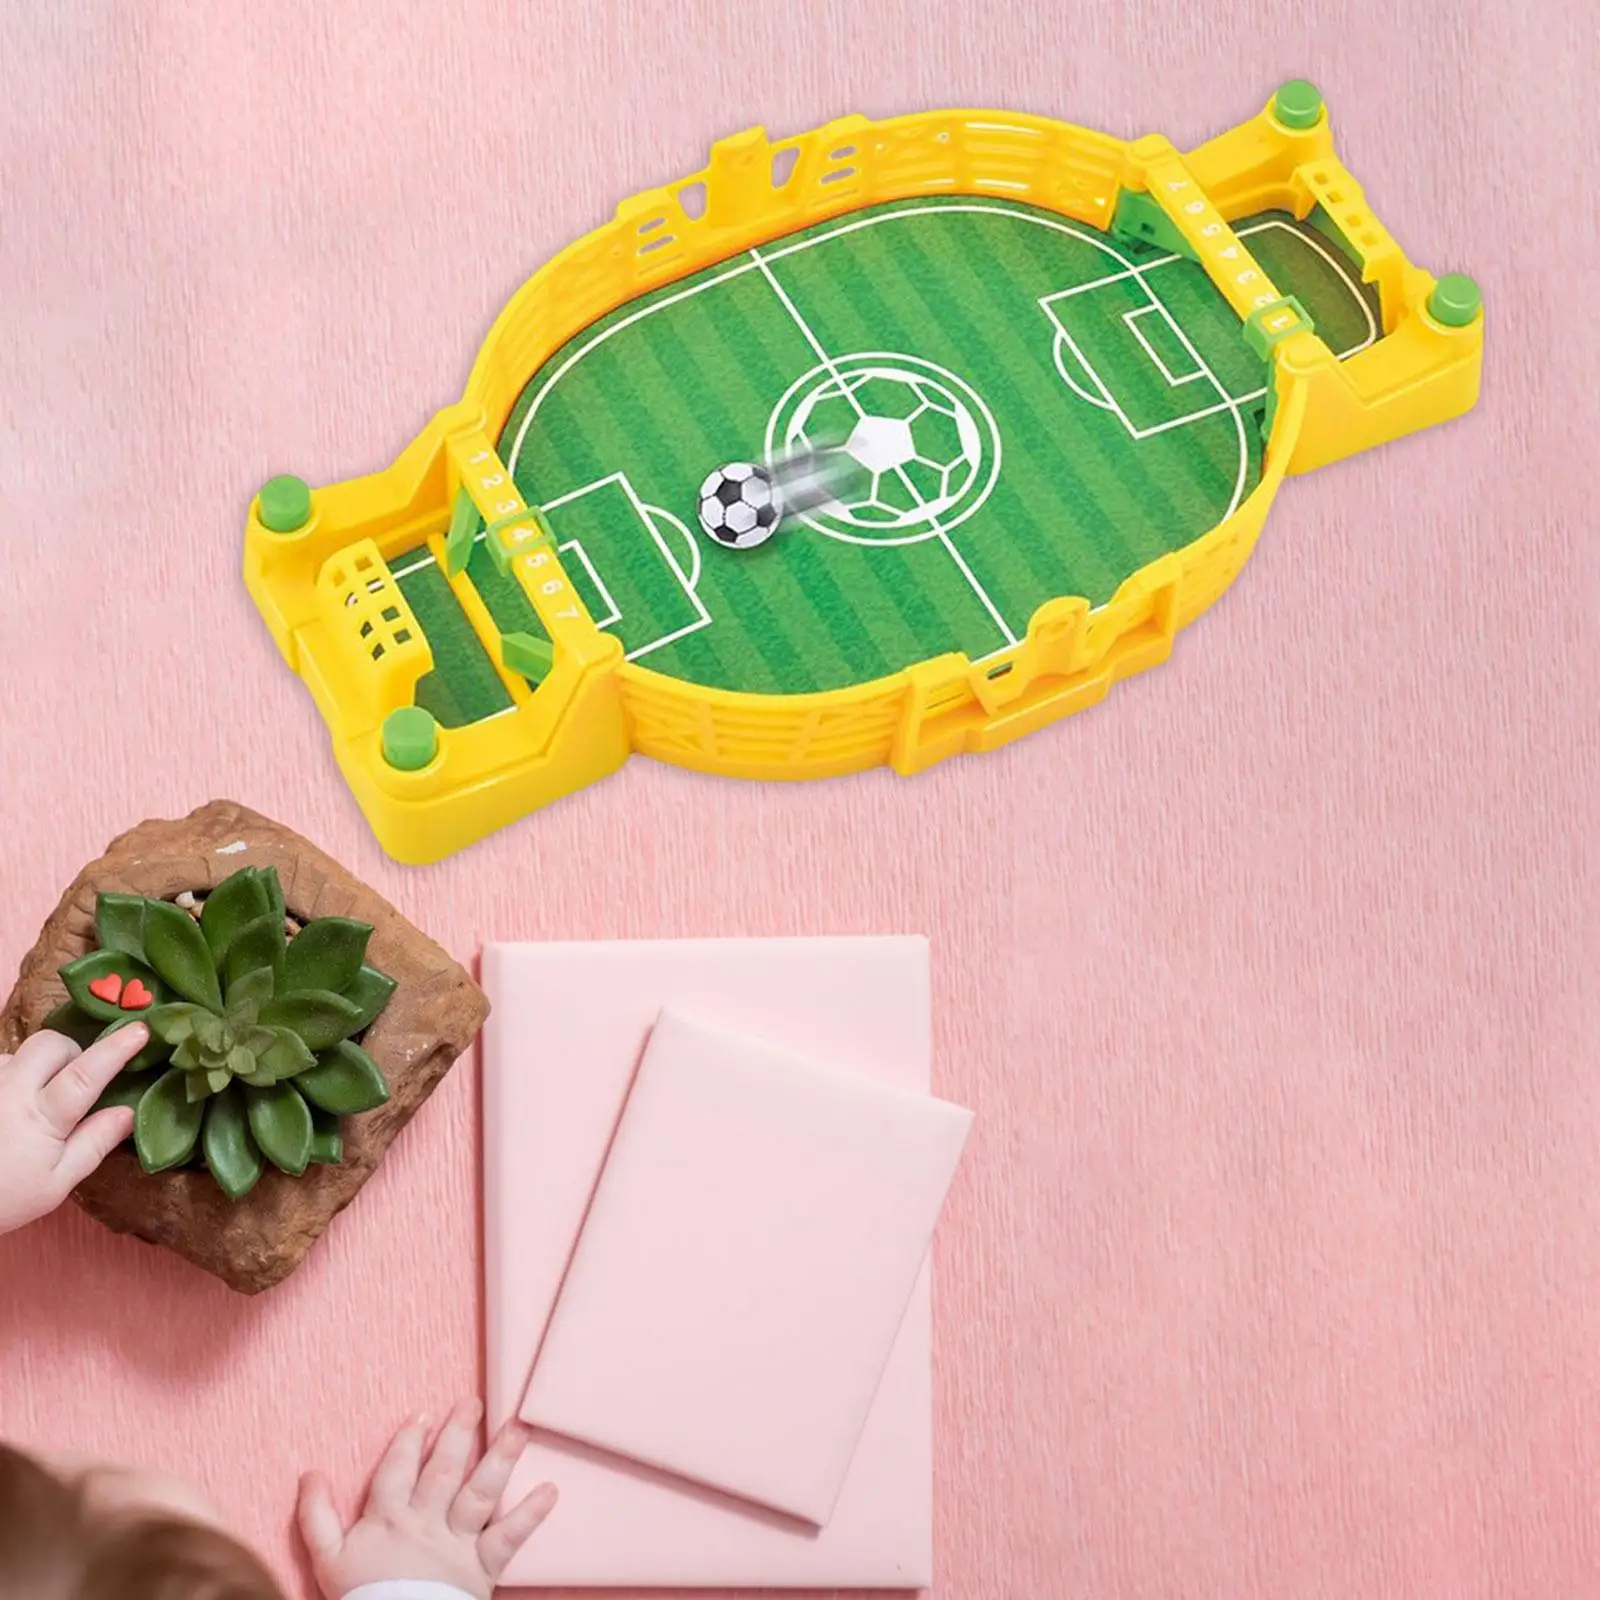 Table Board Football Game Interactive Toy Mini Tabletop Football Soccer Pinball